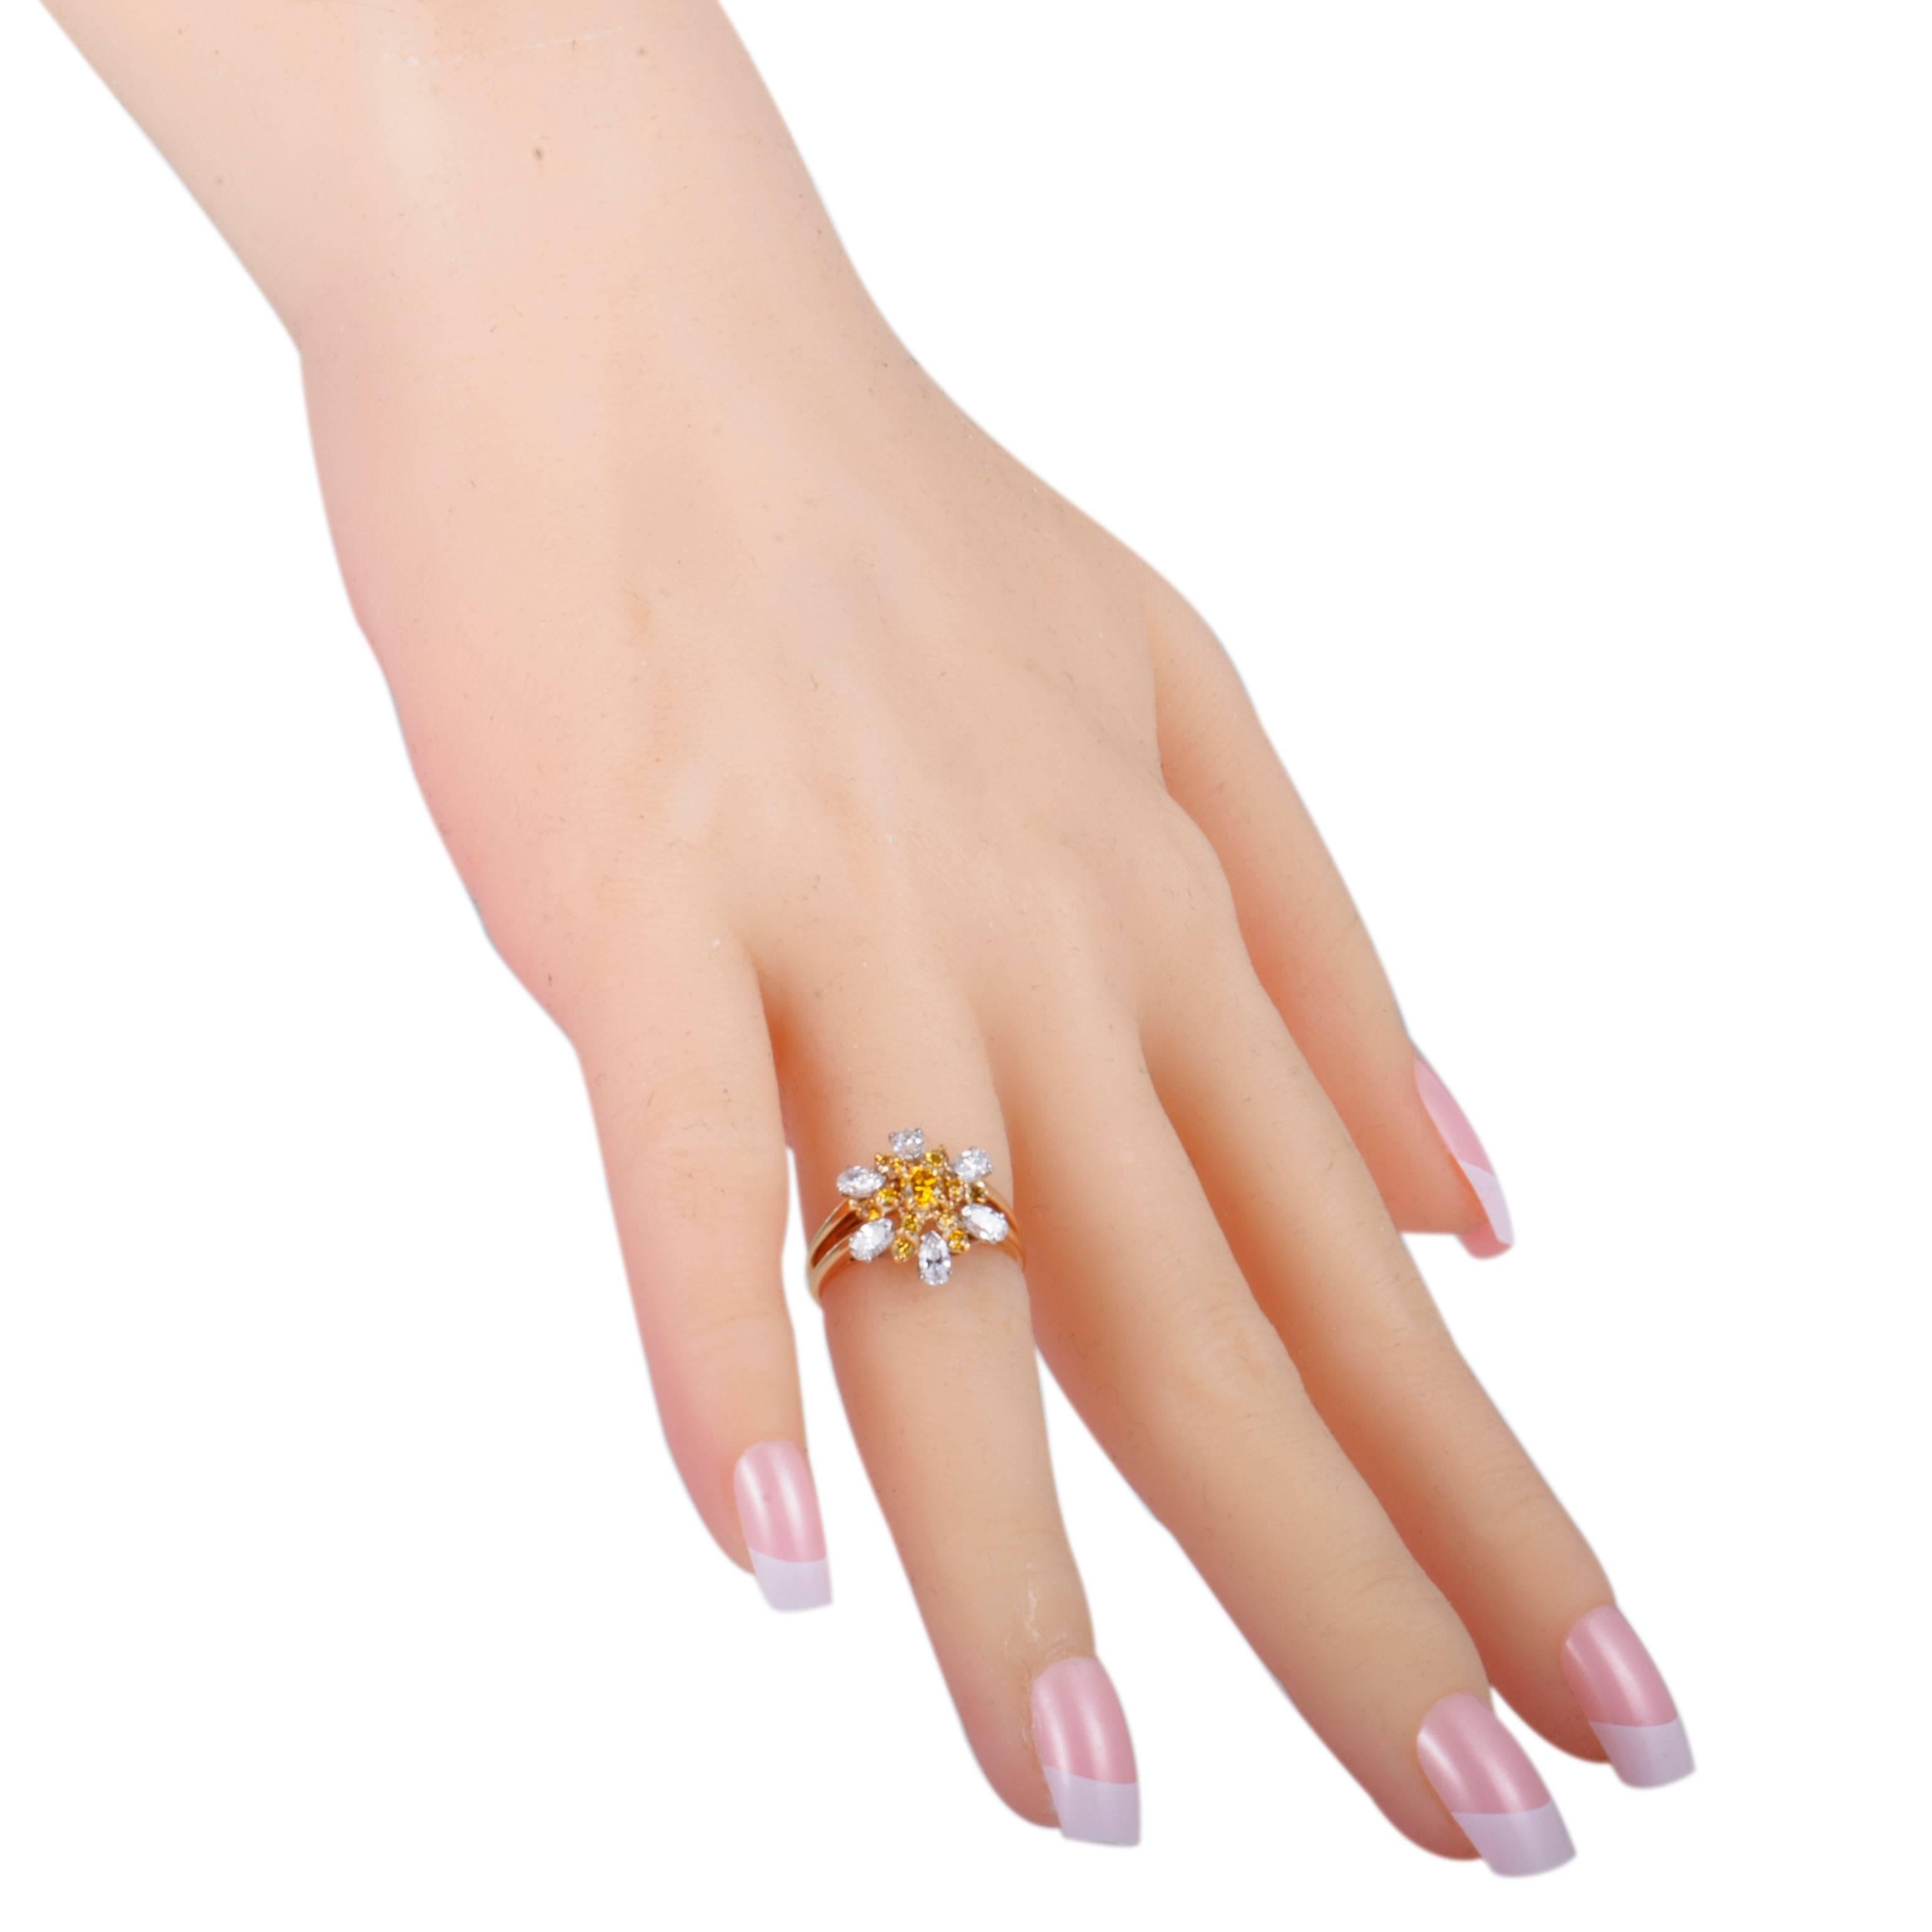 Women's Oscar Heyman White and Yellow Diamond Yellow and White Gold Flower Ring